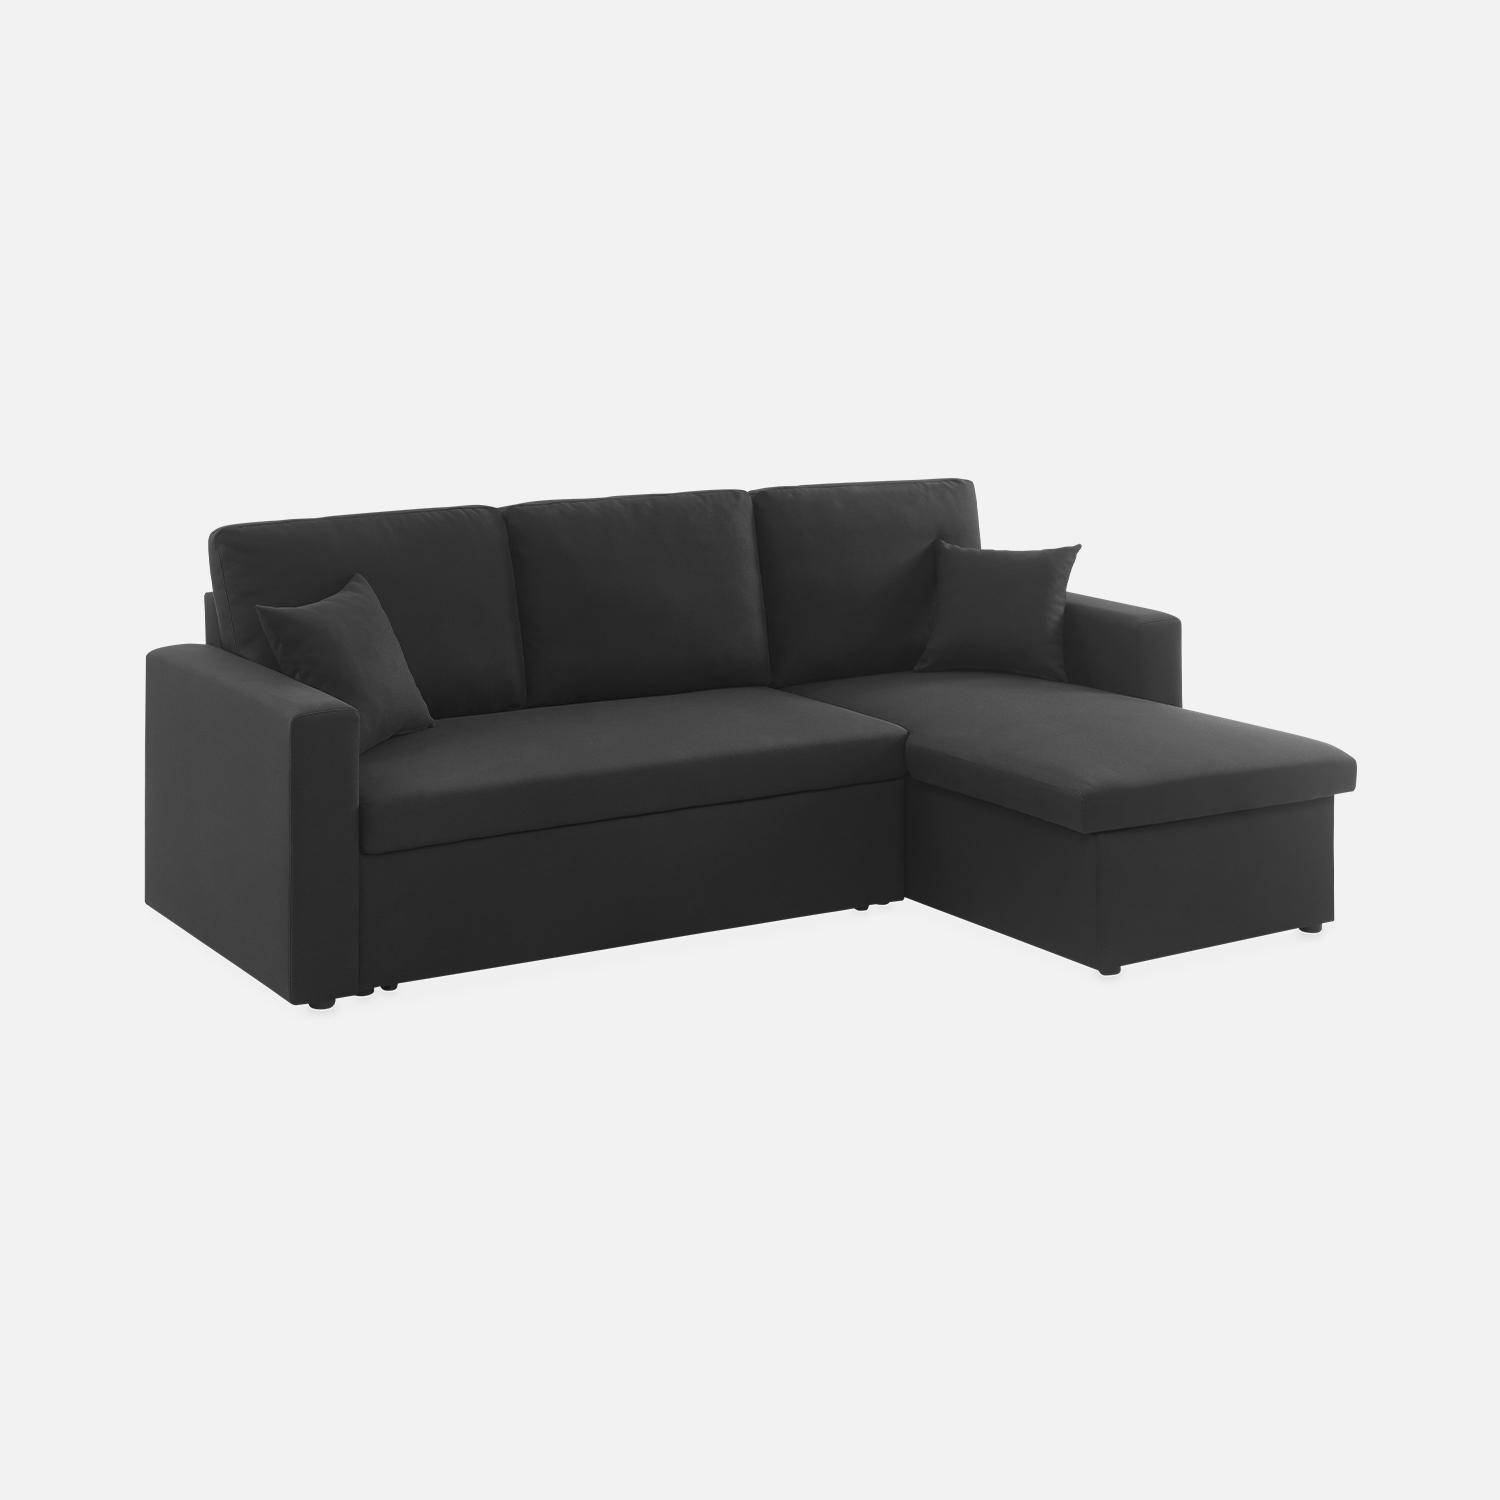 3-seater reversible black corner sofa bed with storage box, black L219xD81xH68cm, IDA,sweeek,Photo5